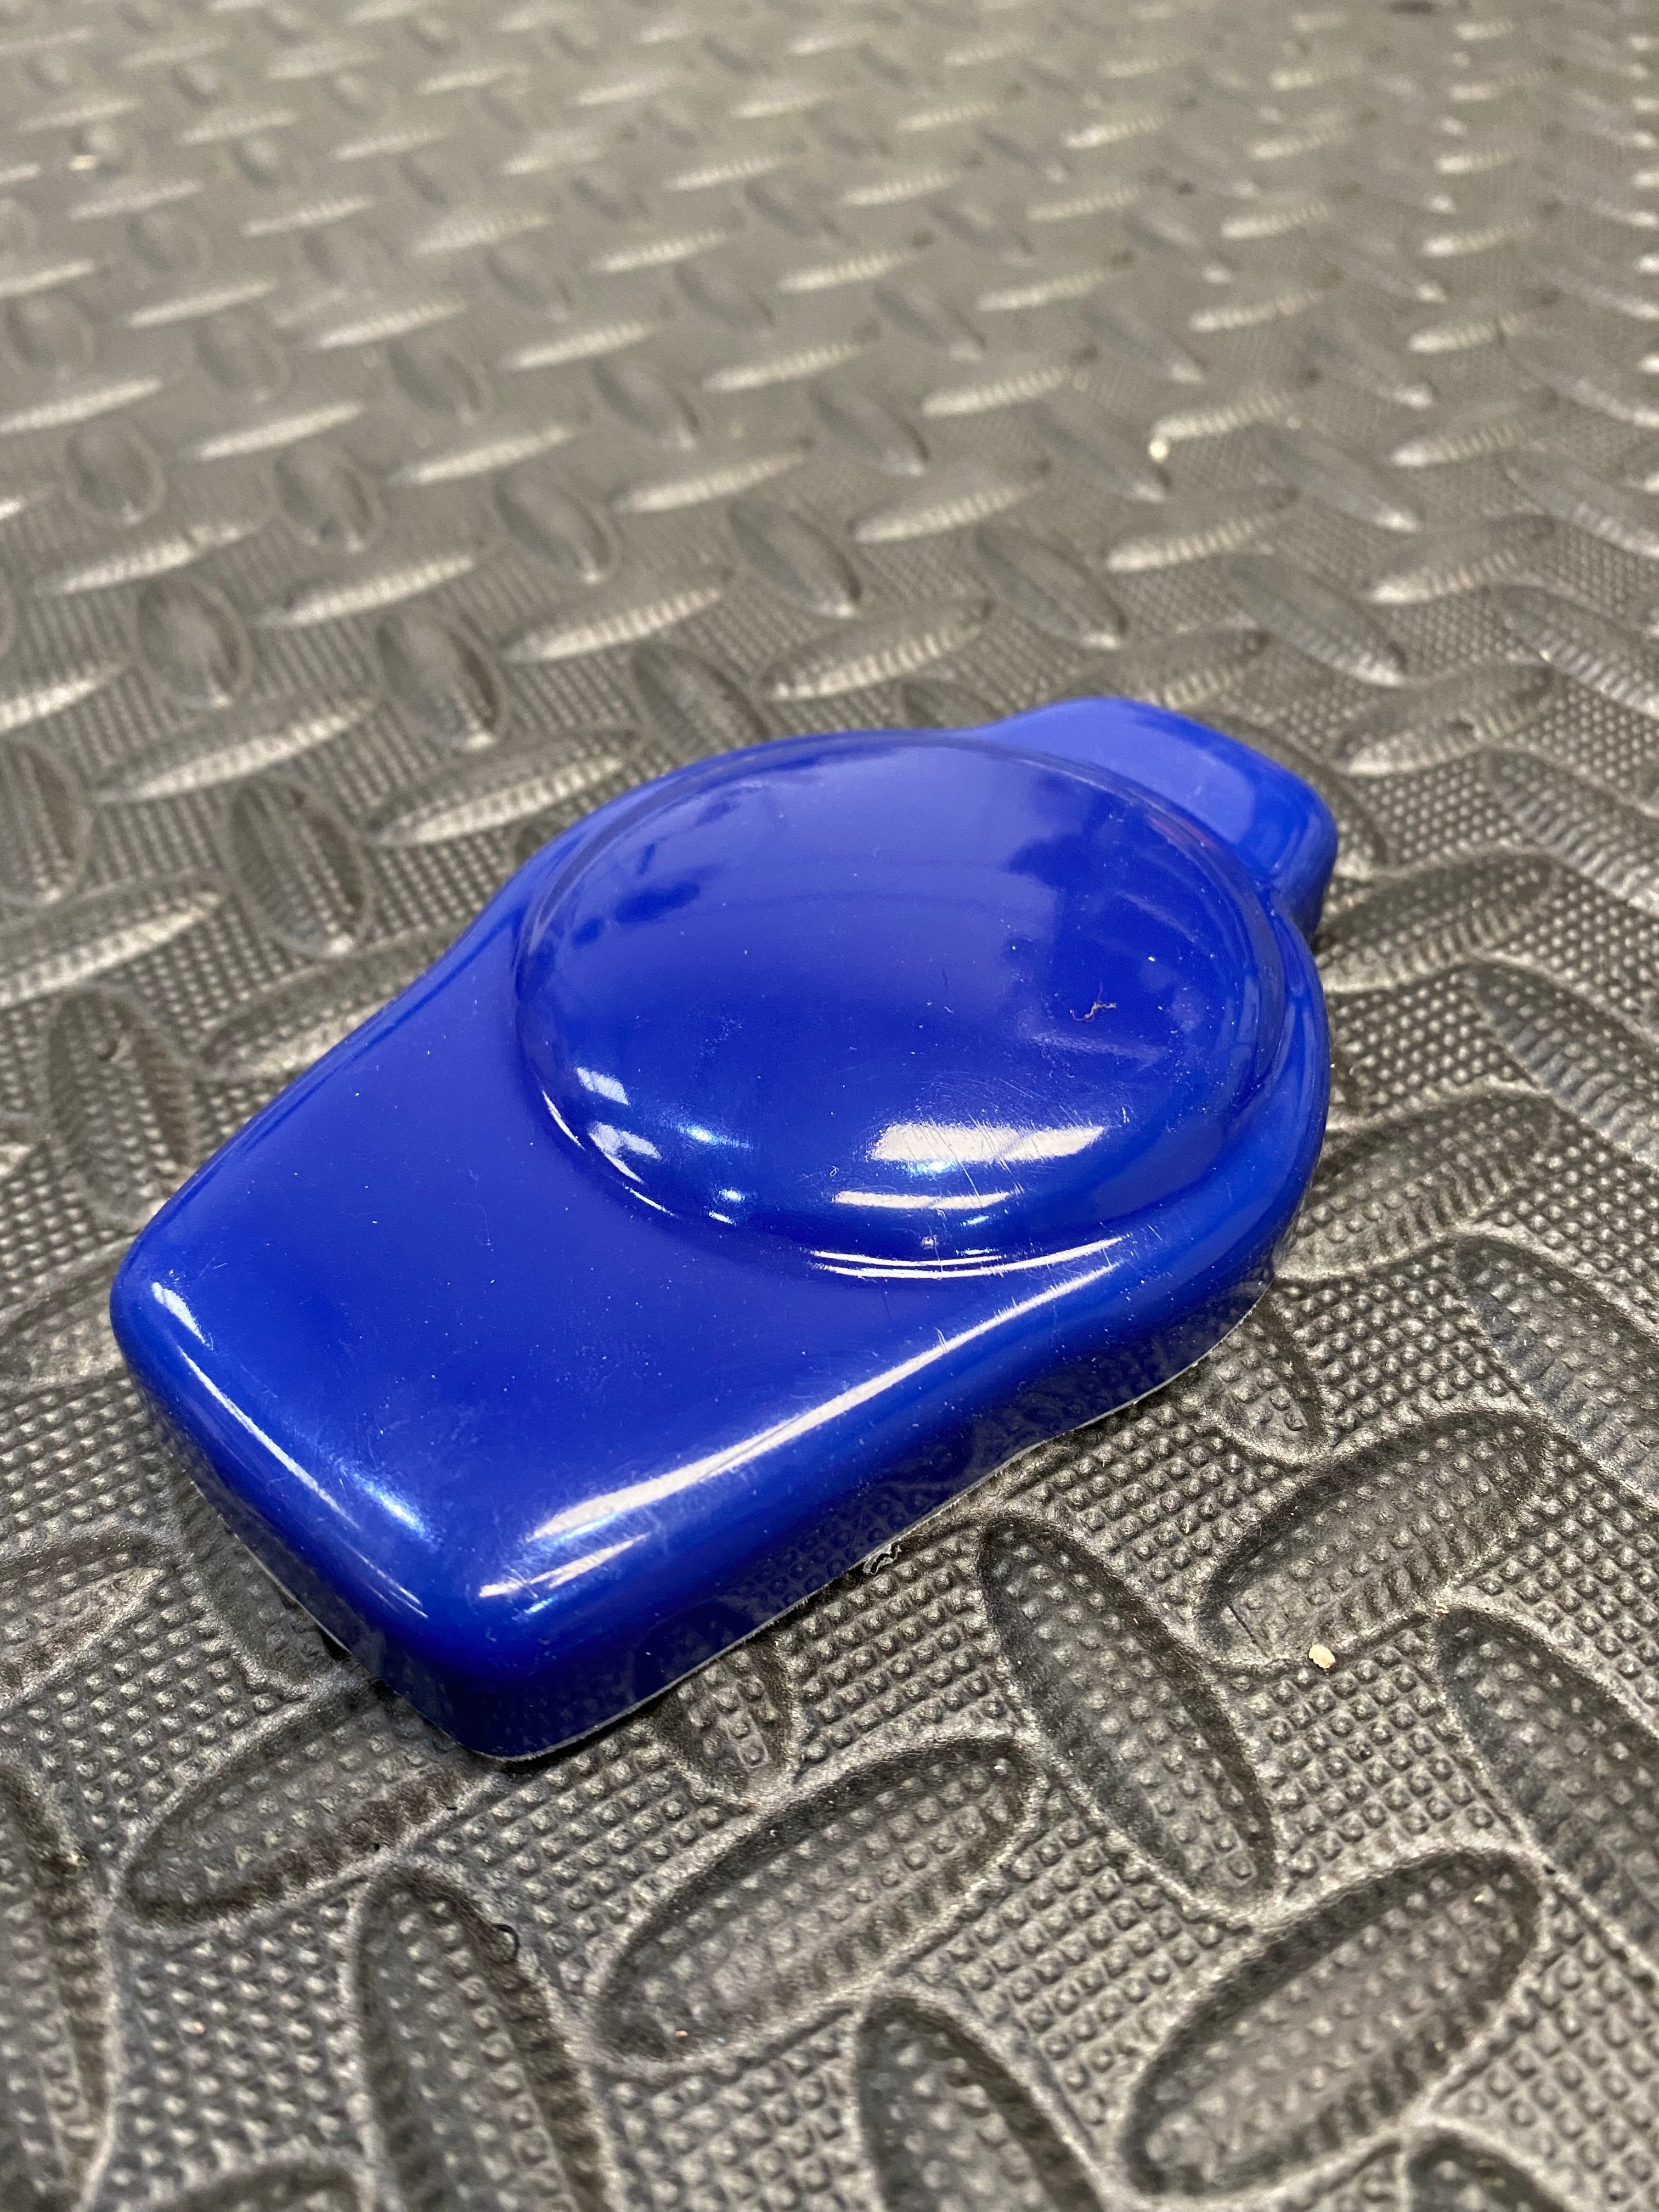 Proform Washer Bottle Cap Cover - Seat Leon (Plastic Finishes)